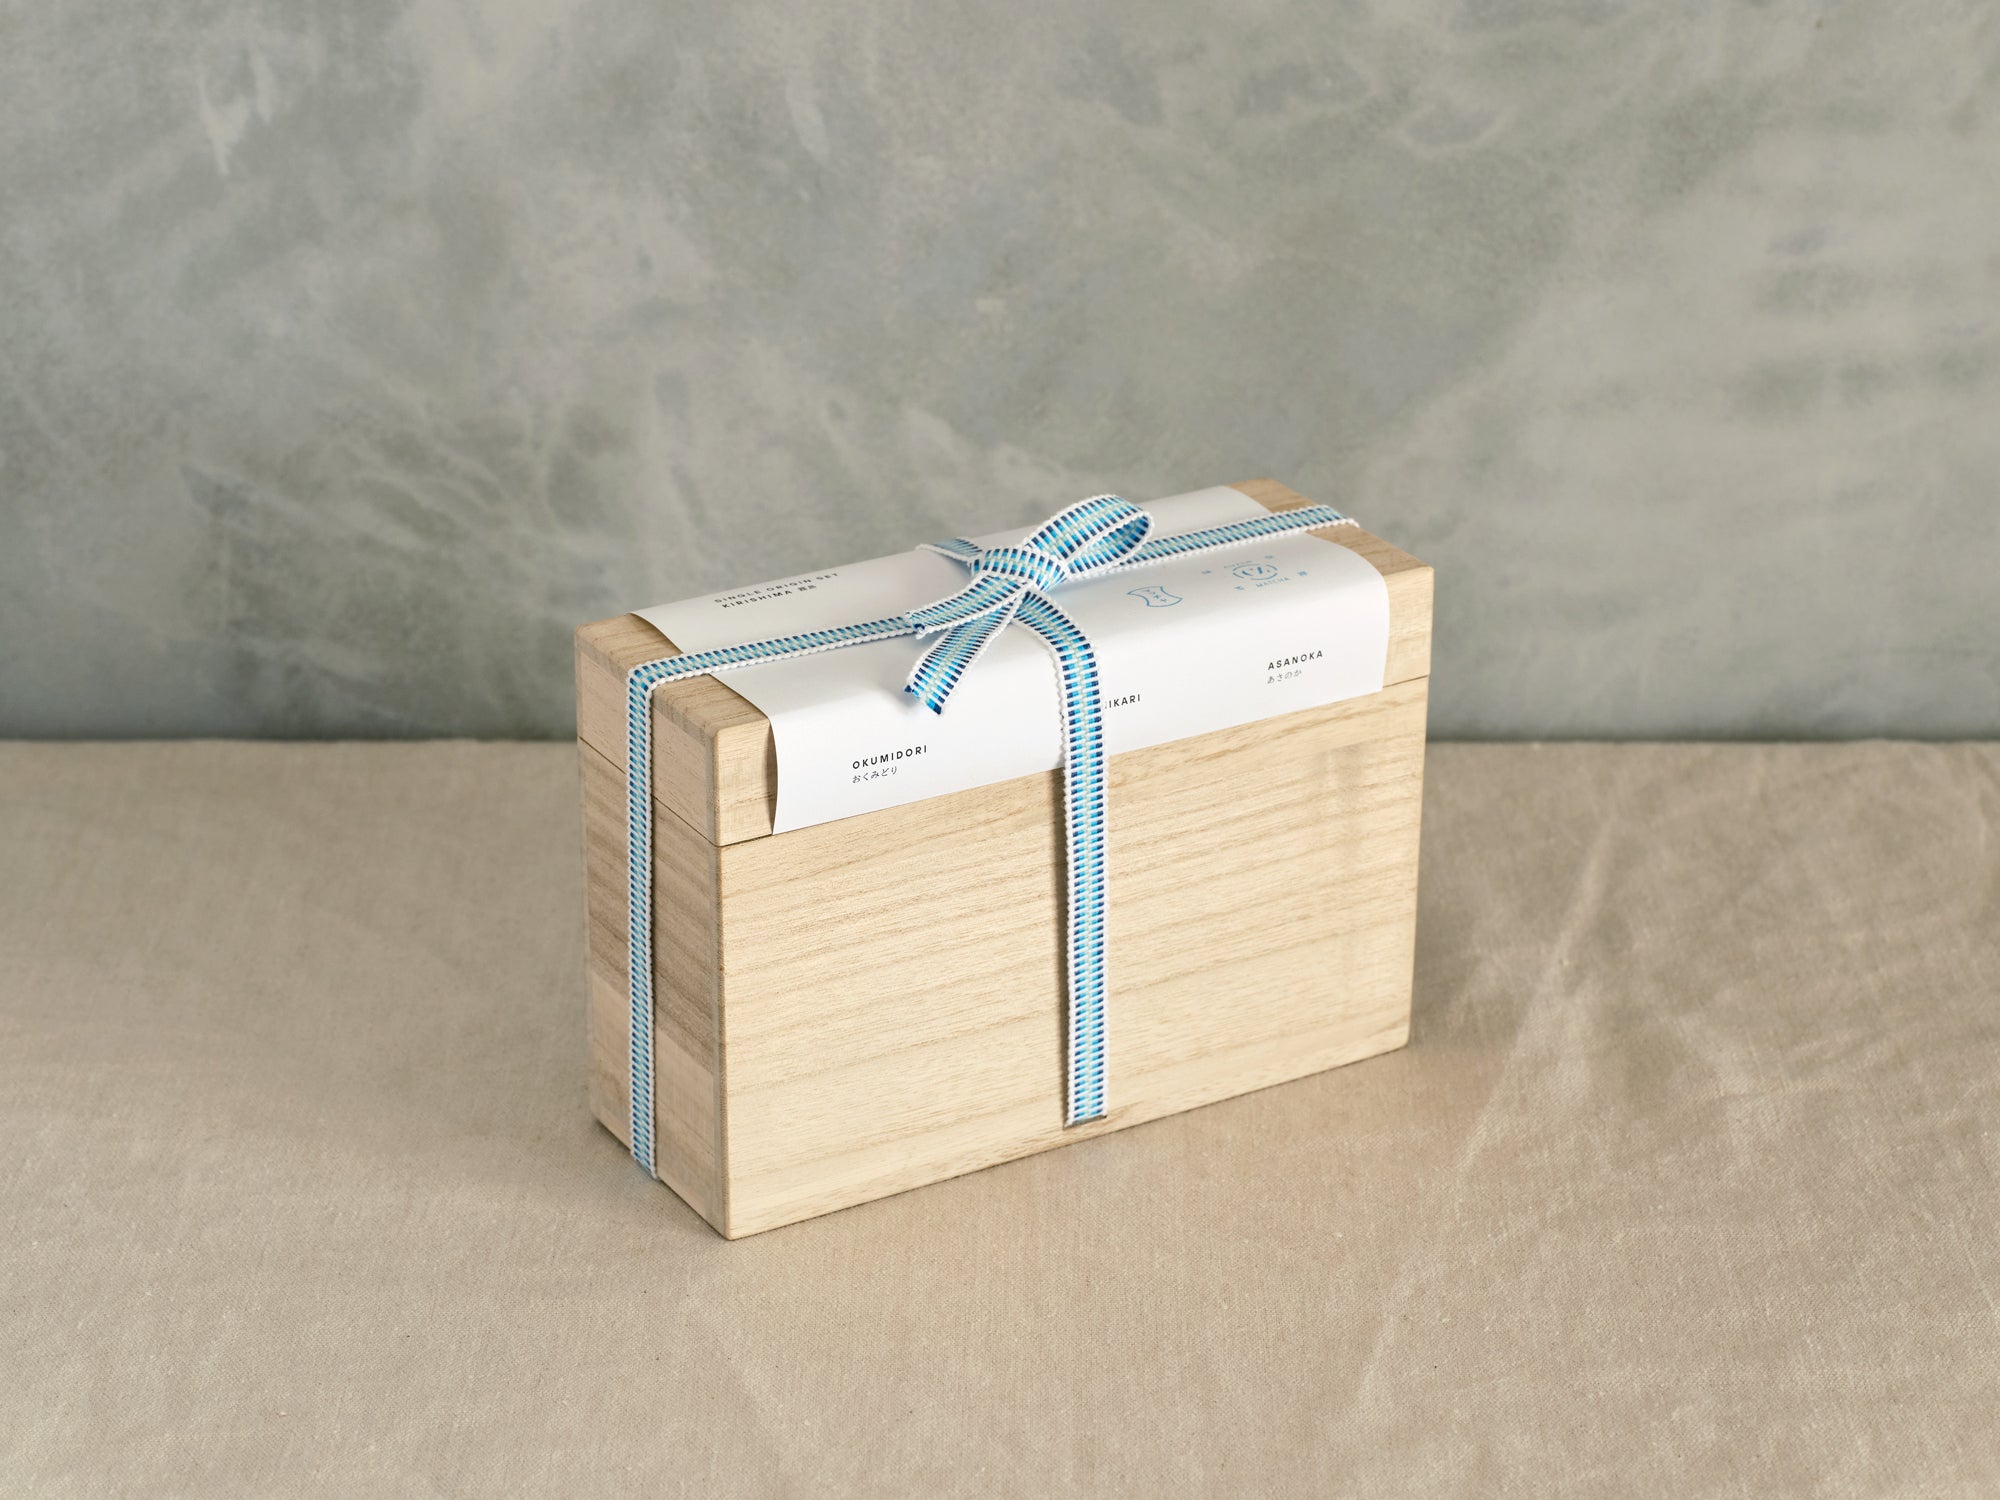  Single Origin Box Set, packaged in a kiri bako with a blue ribbon.